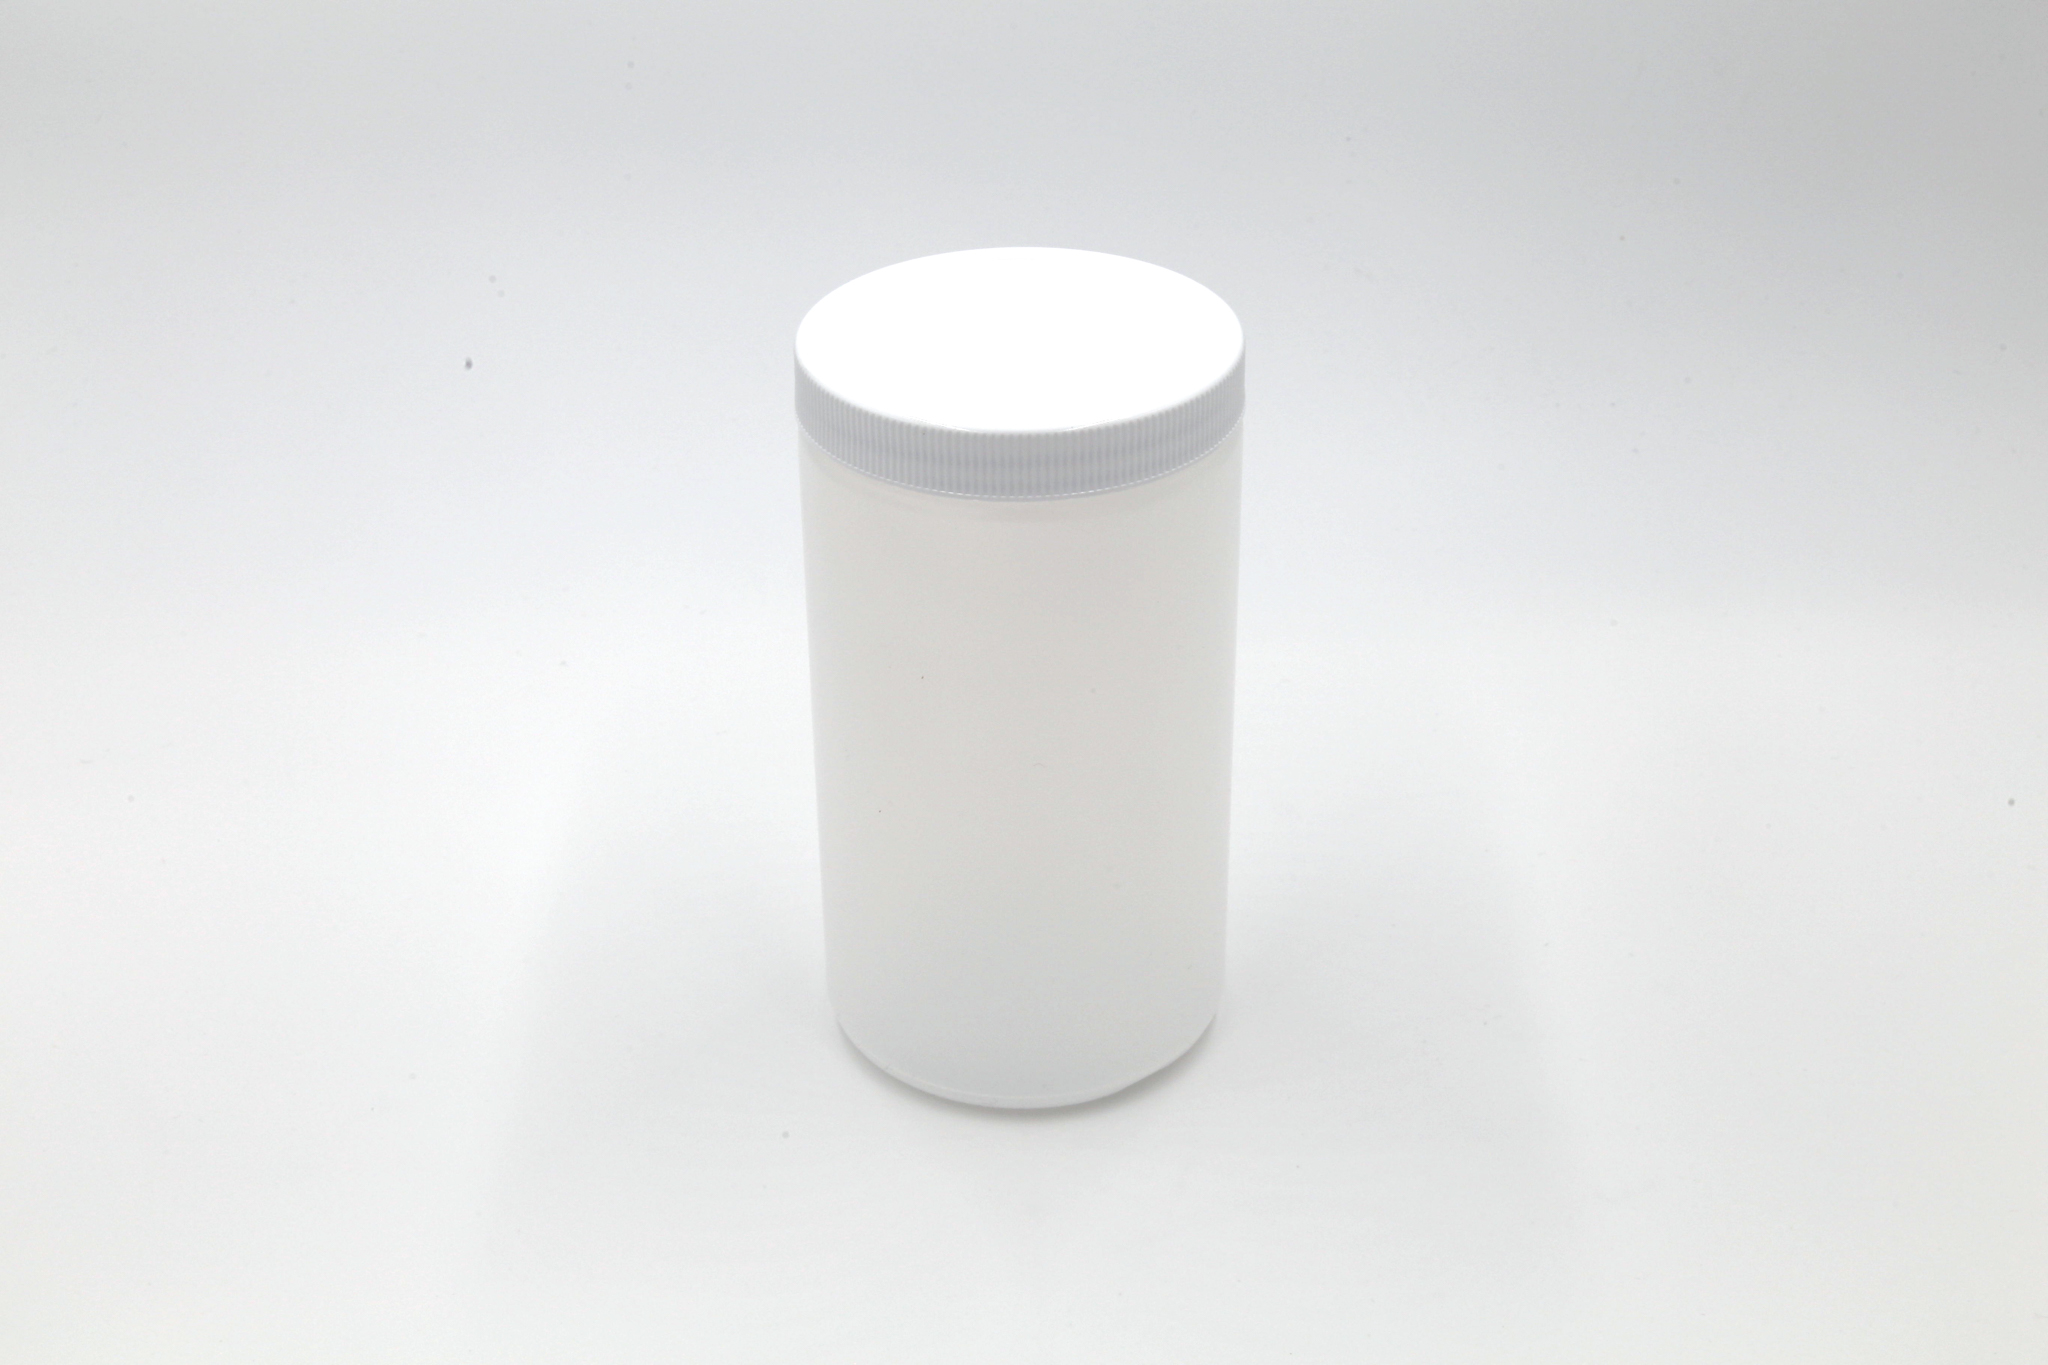 1 quart plastic jar on white background